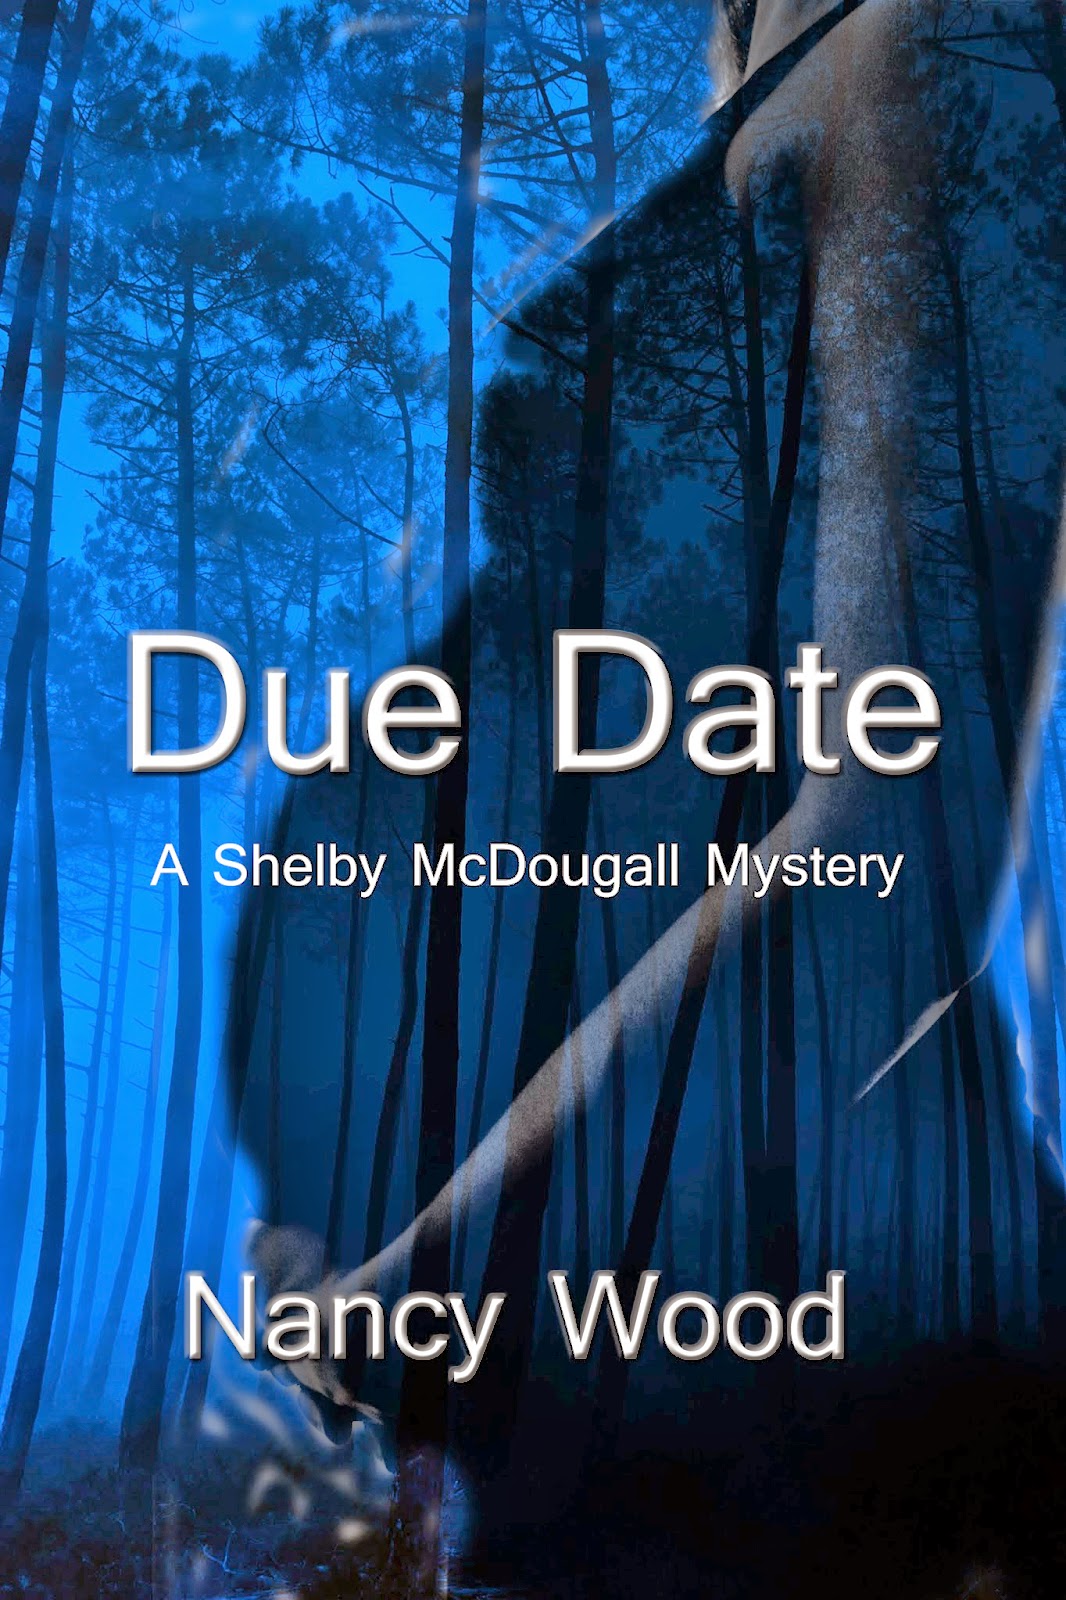 http://www.amazon.com/Due-Date-Nancy-W-Wood-ebook/dp/B00876174M/ref=sr_1_1?s=books&ie=UTF8&qid=1395789347&sr=1-1&keywords=Nancy+Wood+Due+date